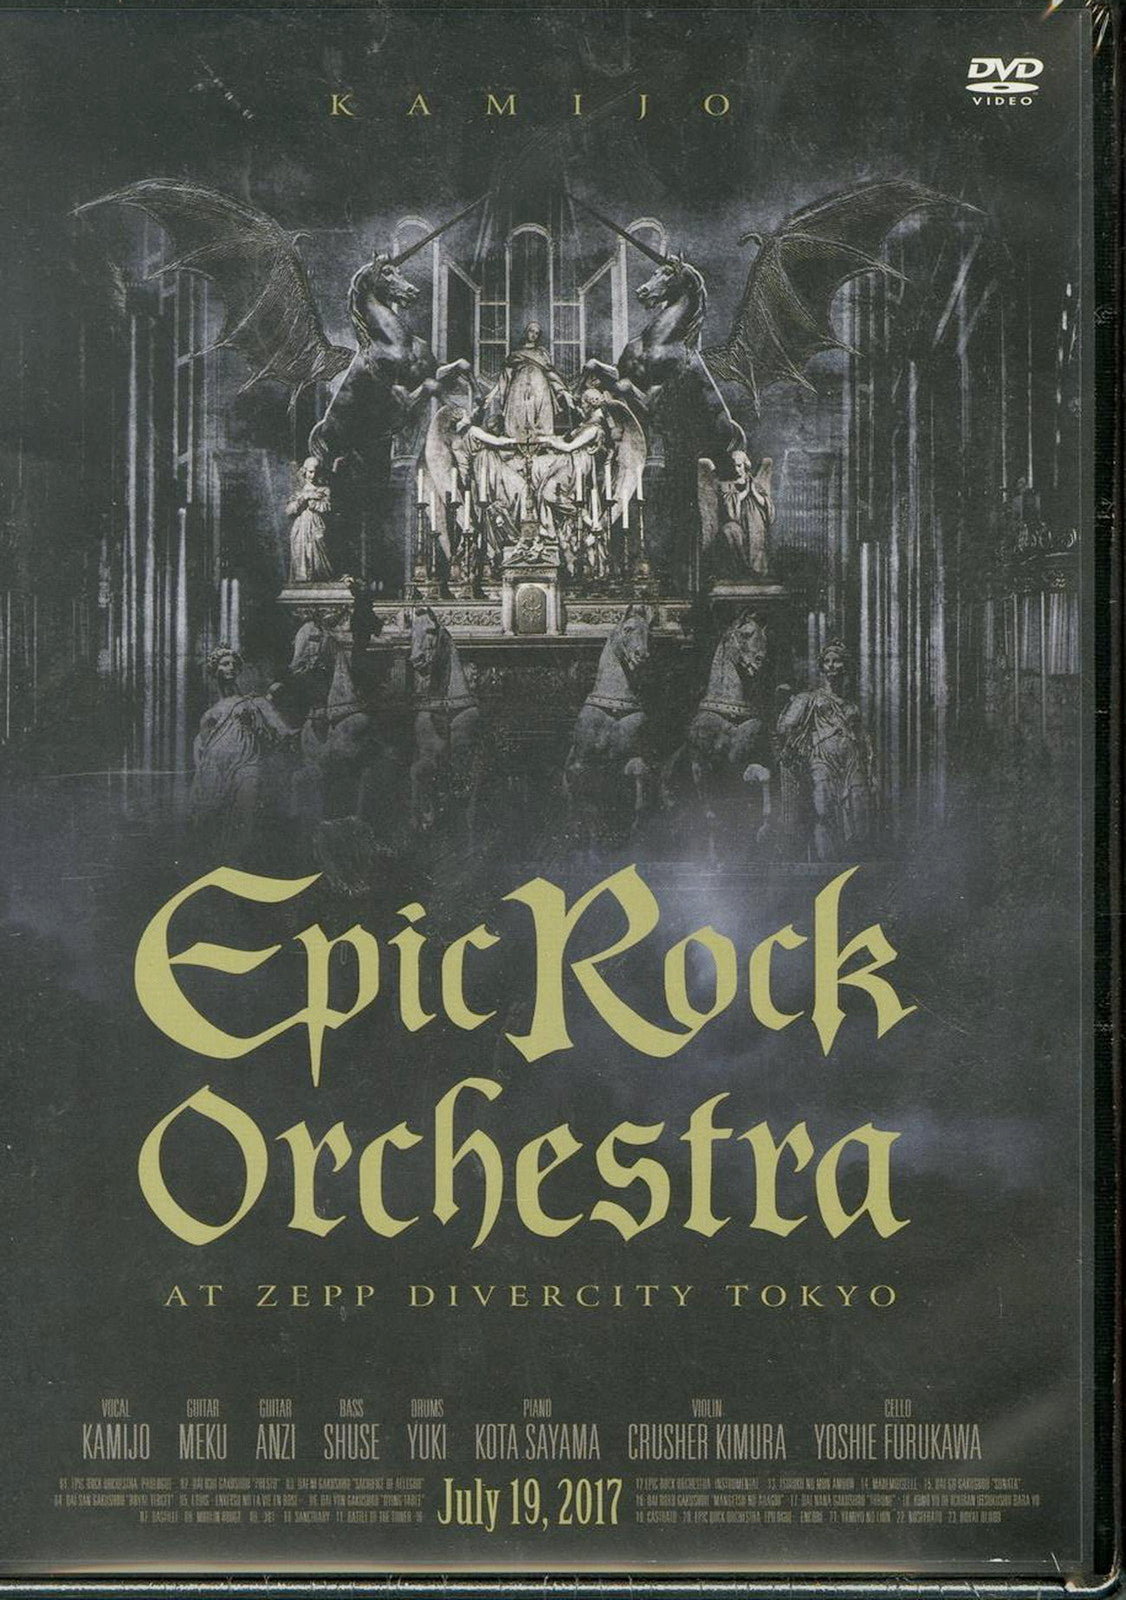 Kamijo - Epic Rock Orchestra At Zepp Divercity Tokyo - Japan DVD+2 CD+ –  CDs Vinyl Japan Store DVD